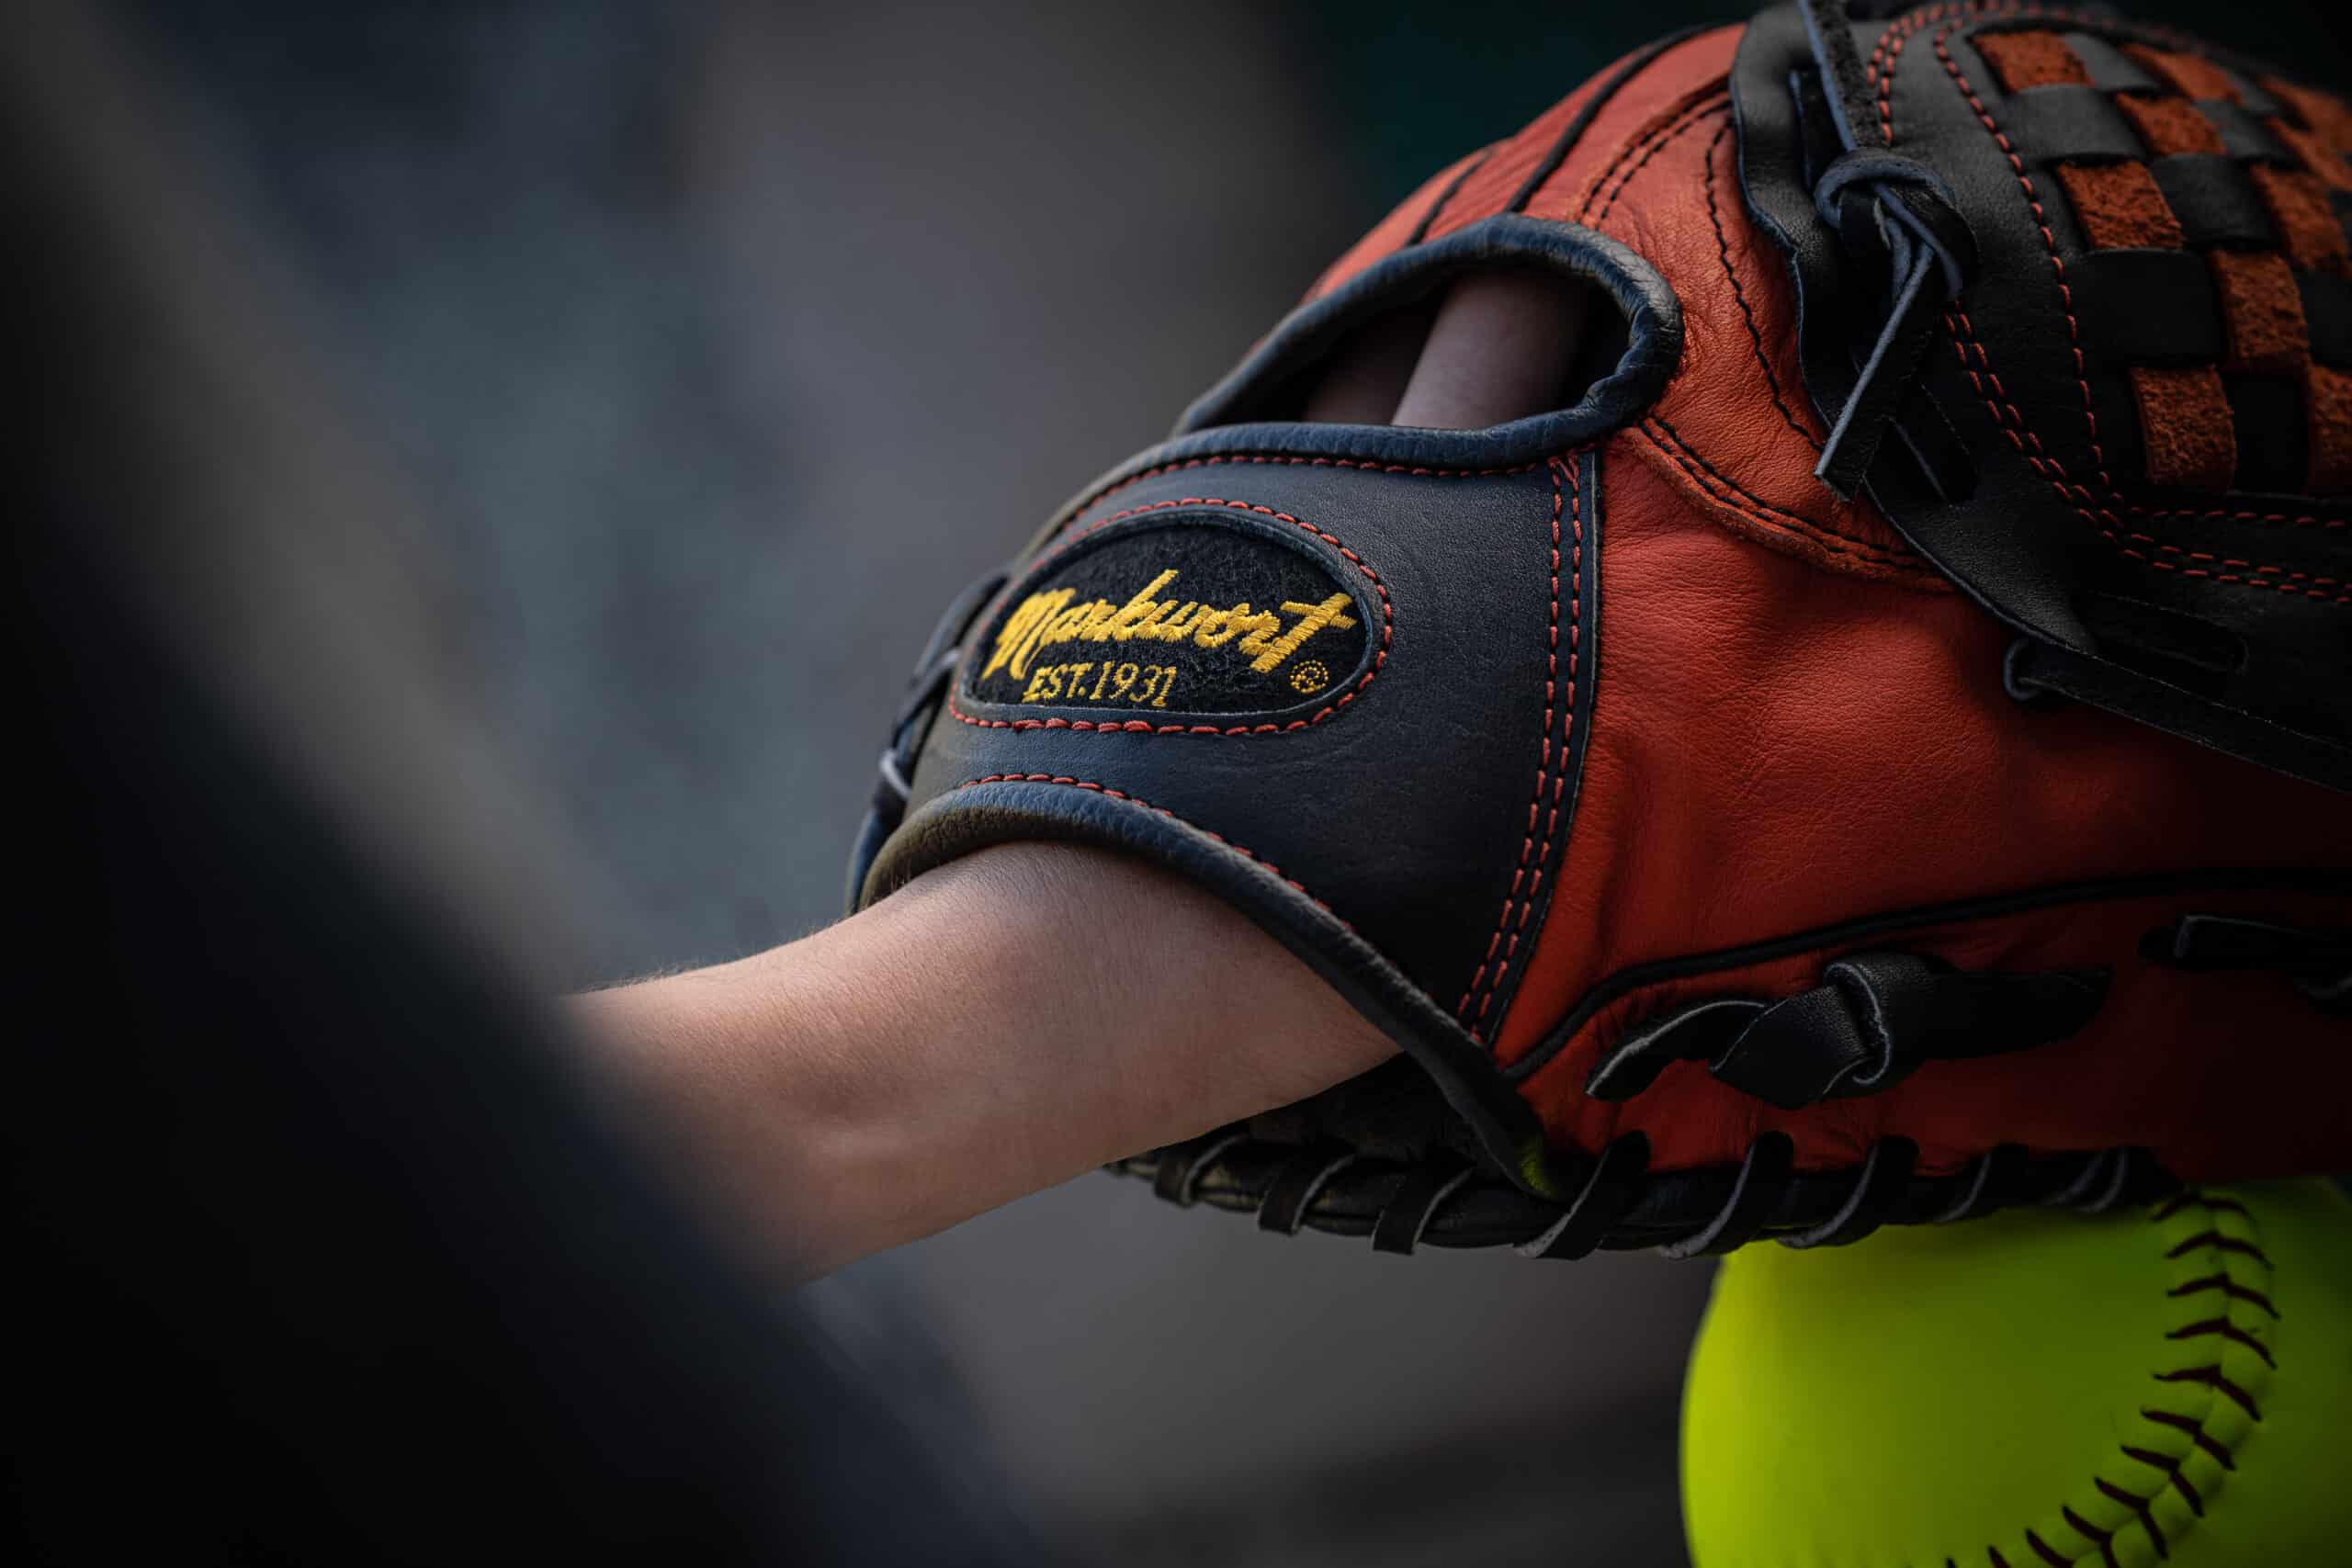 Lifestyle Photography - St. Louis Manufacturer Markwort makes baseball and softball equipment.